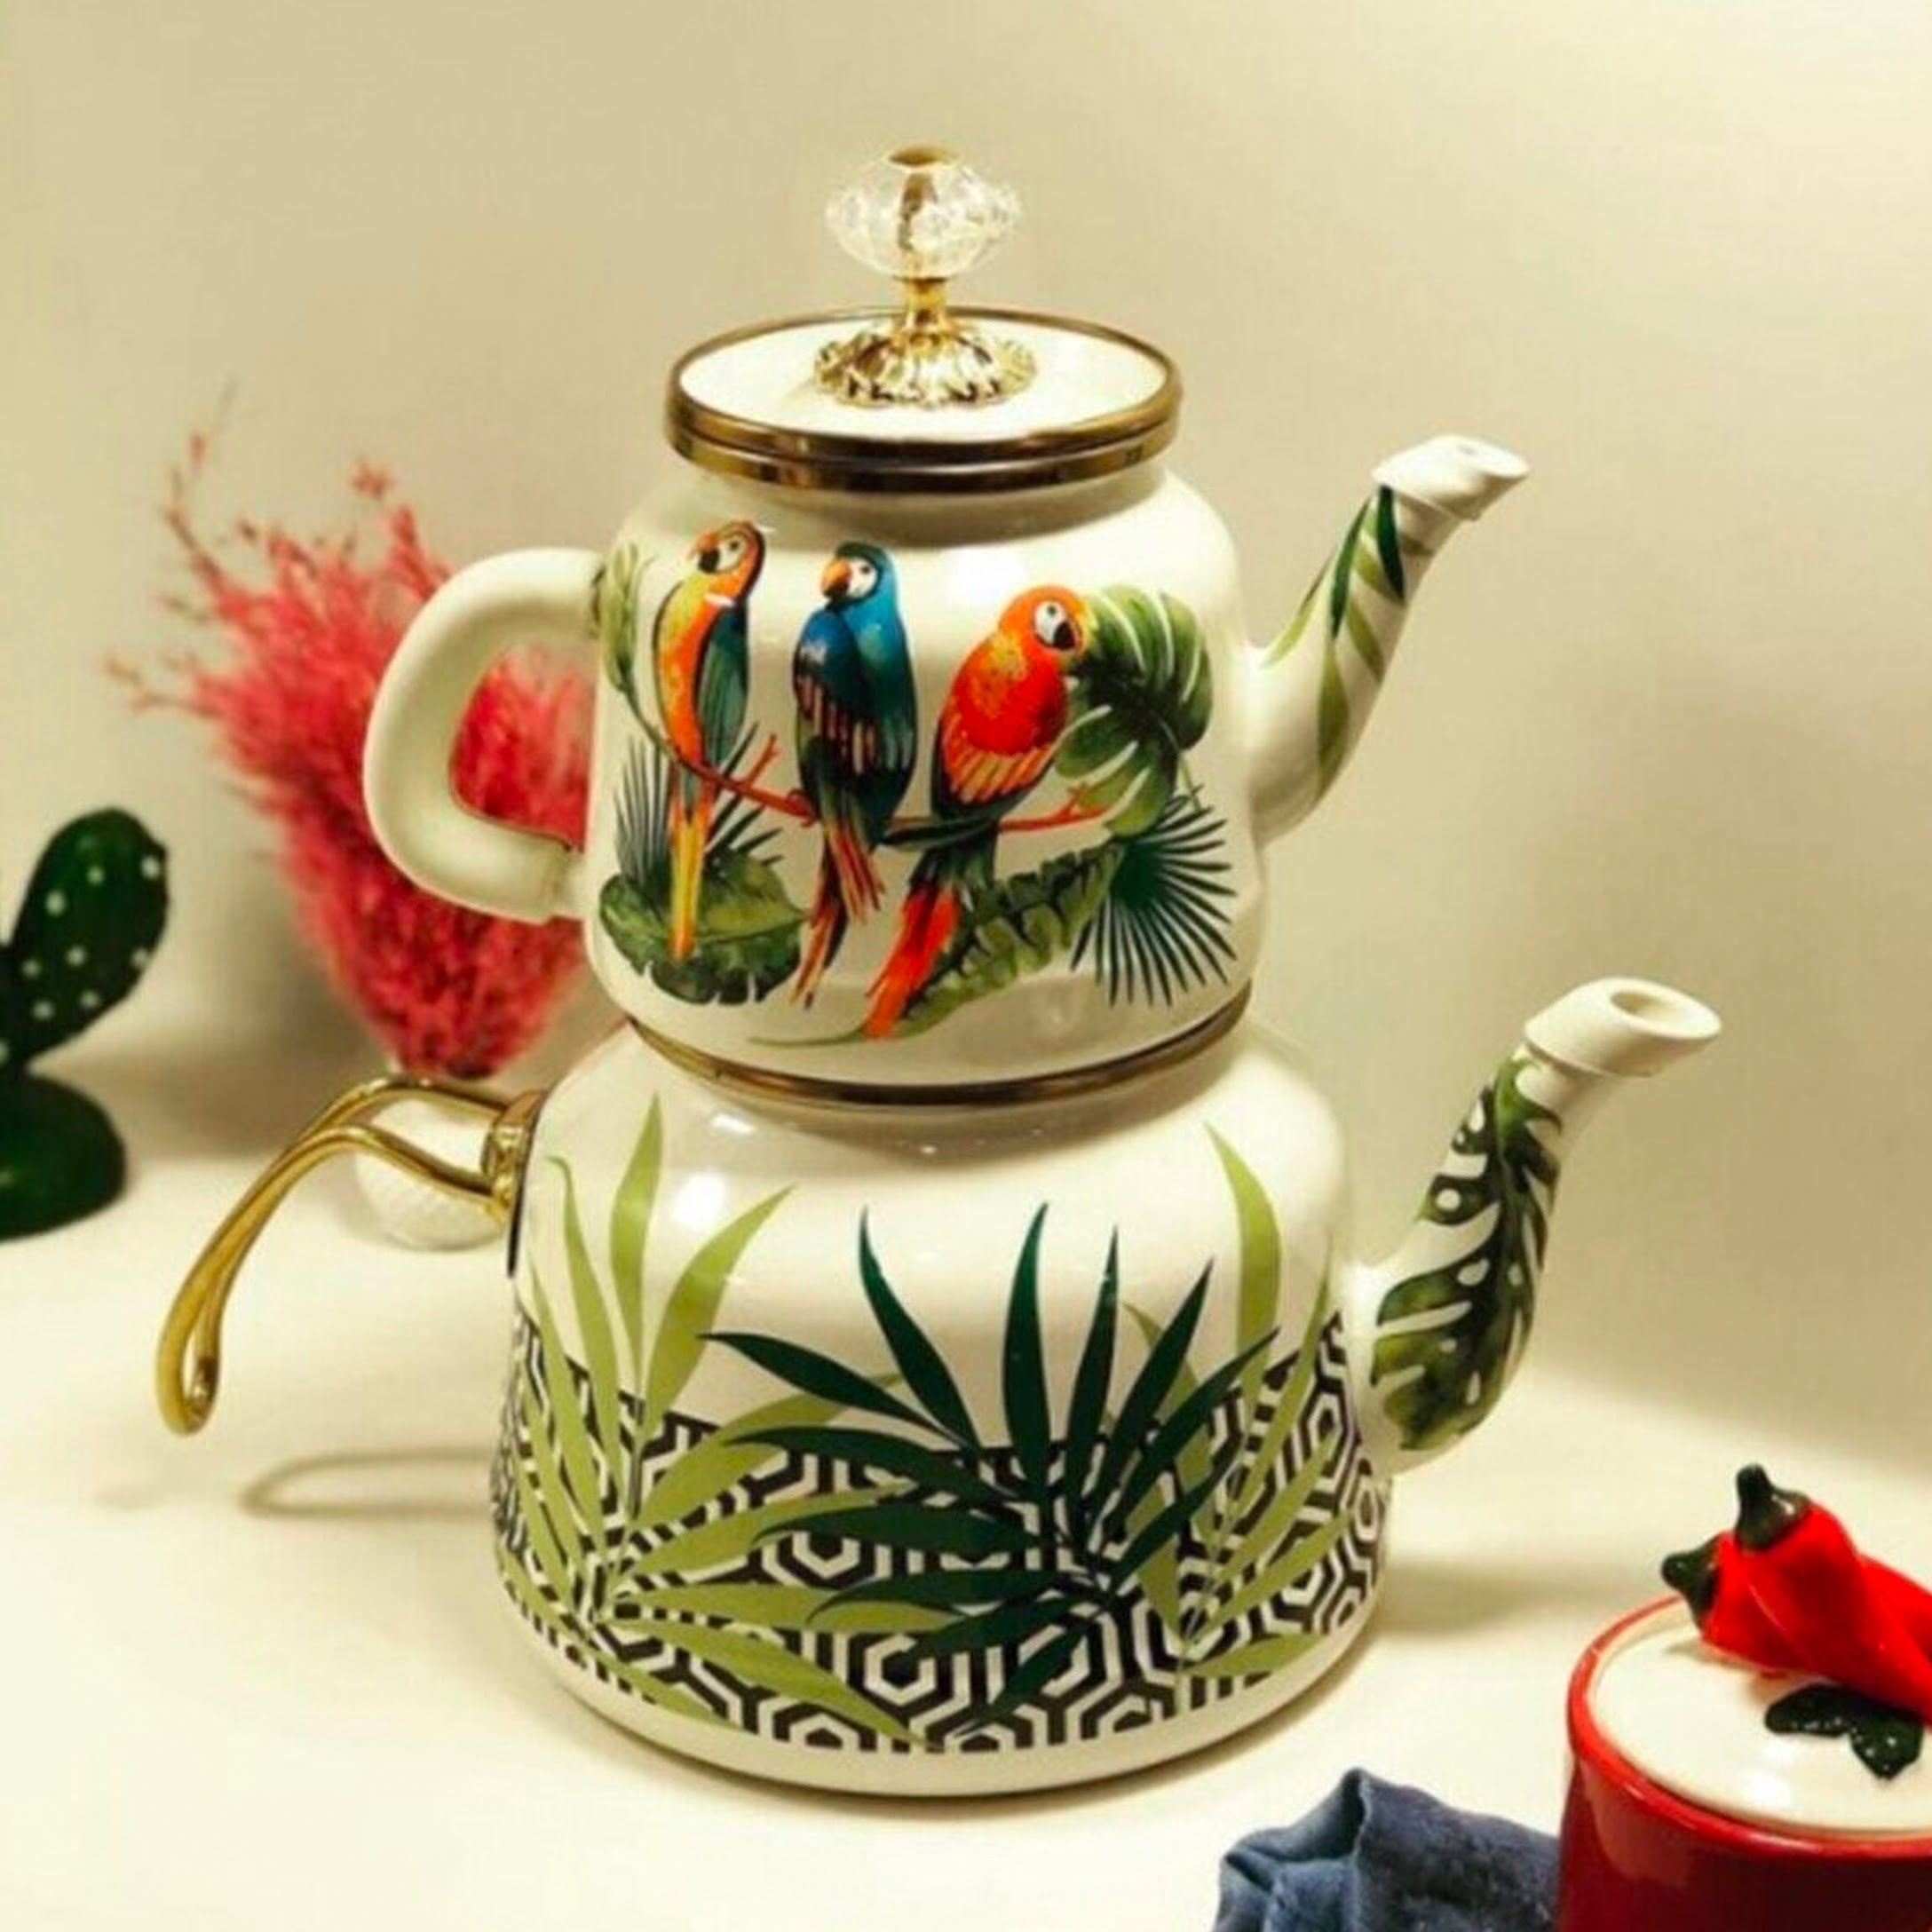 Handmade Original Copper Turkish Tea Pot Kettle